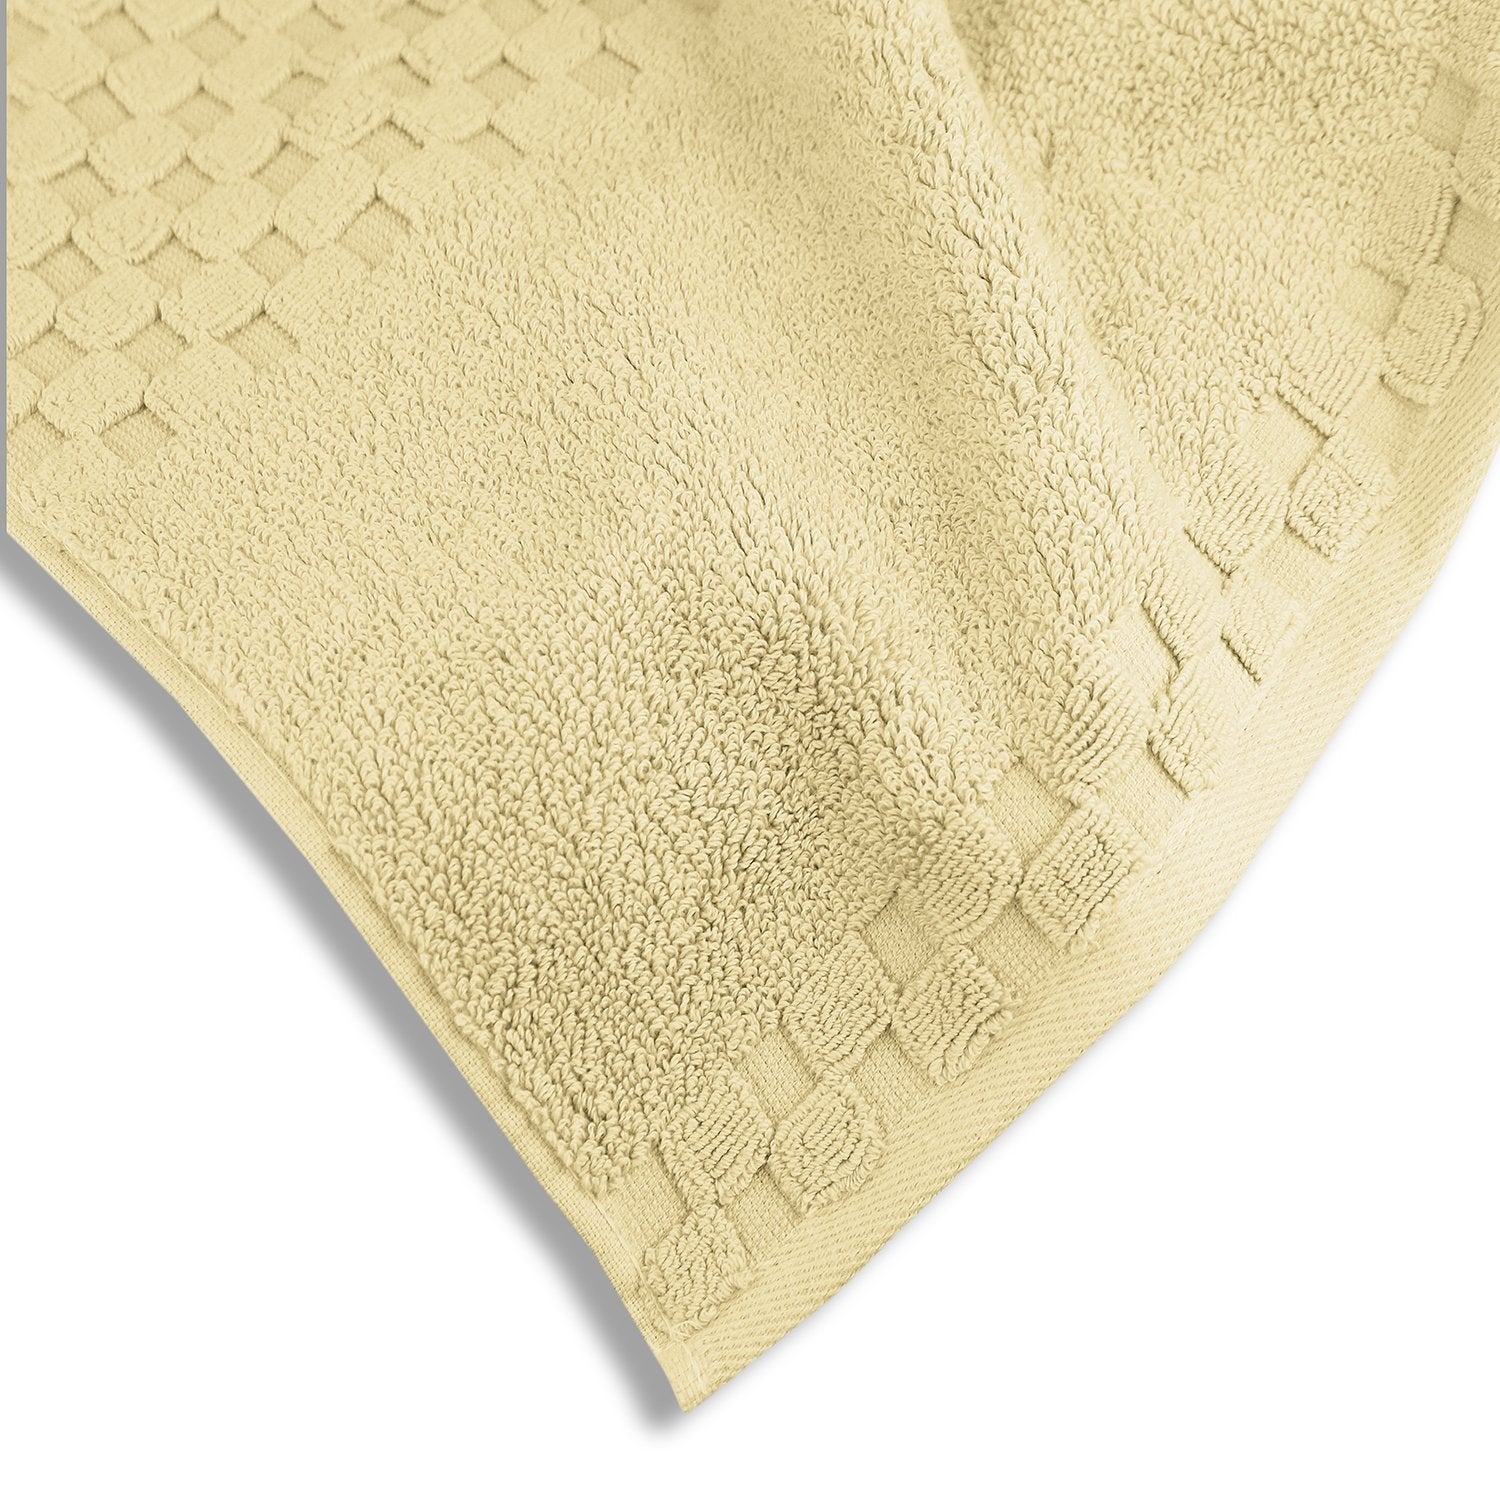 Luxor 6pc Bath Towel Set – City Mattress